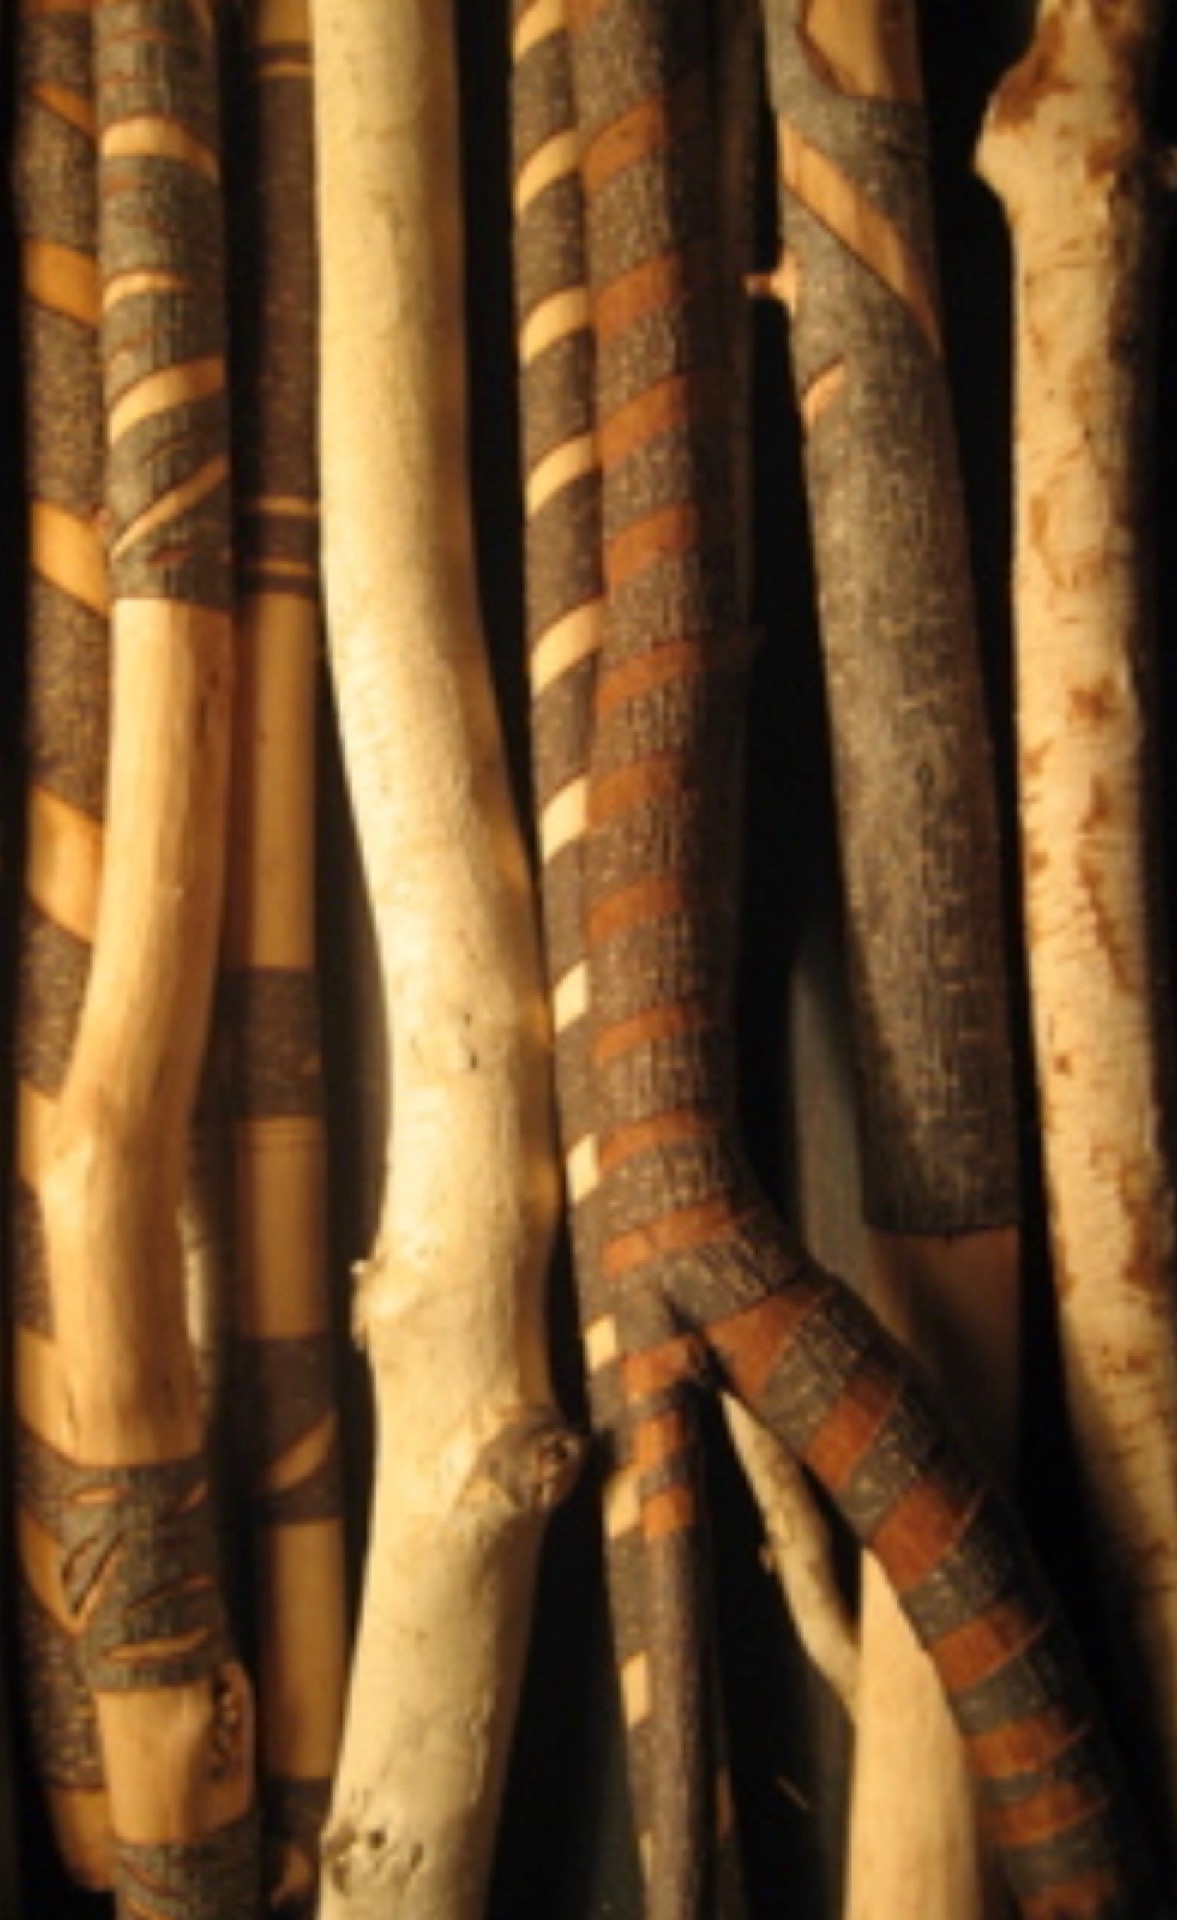 carved-sticks 2.jpg